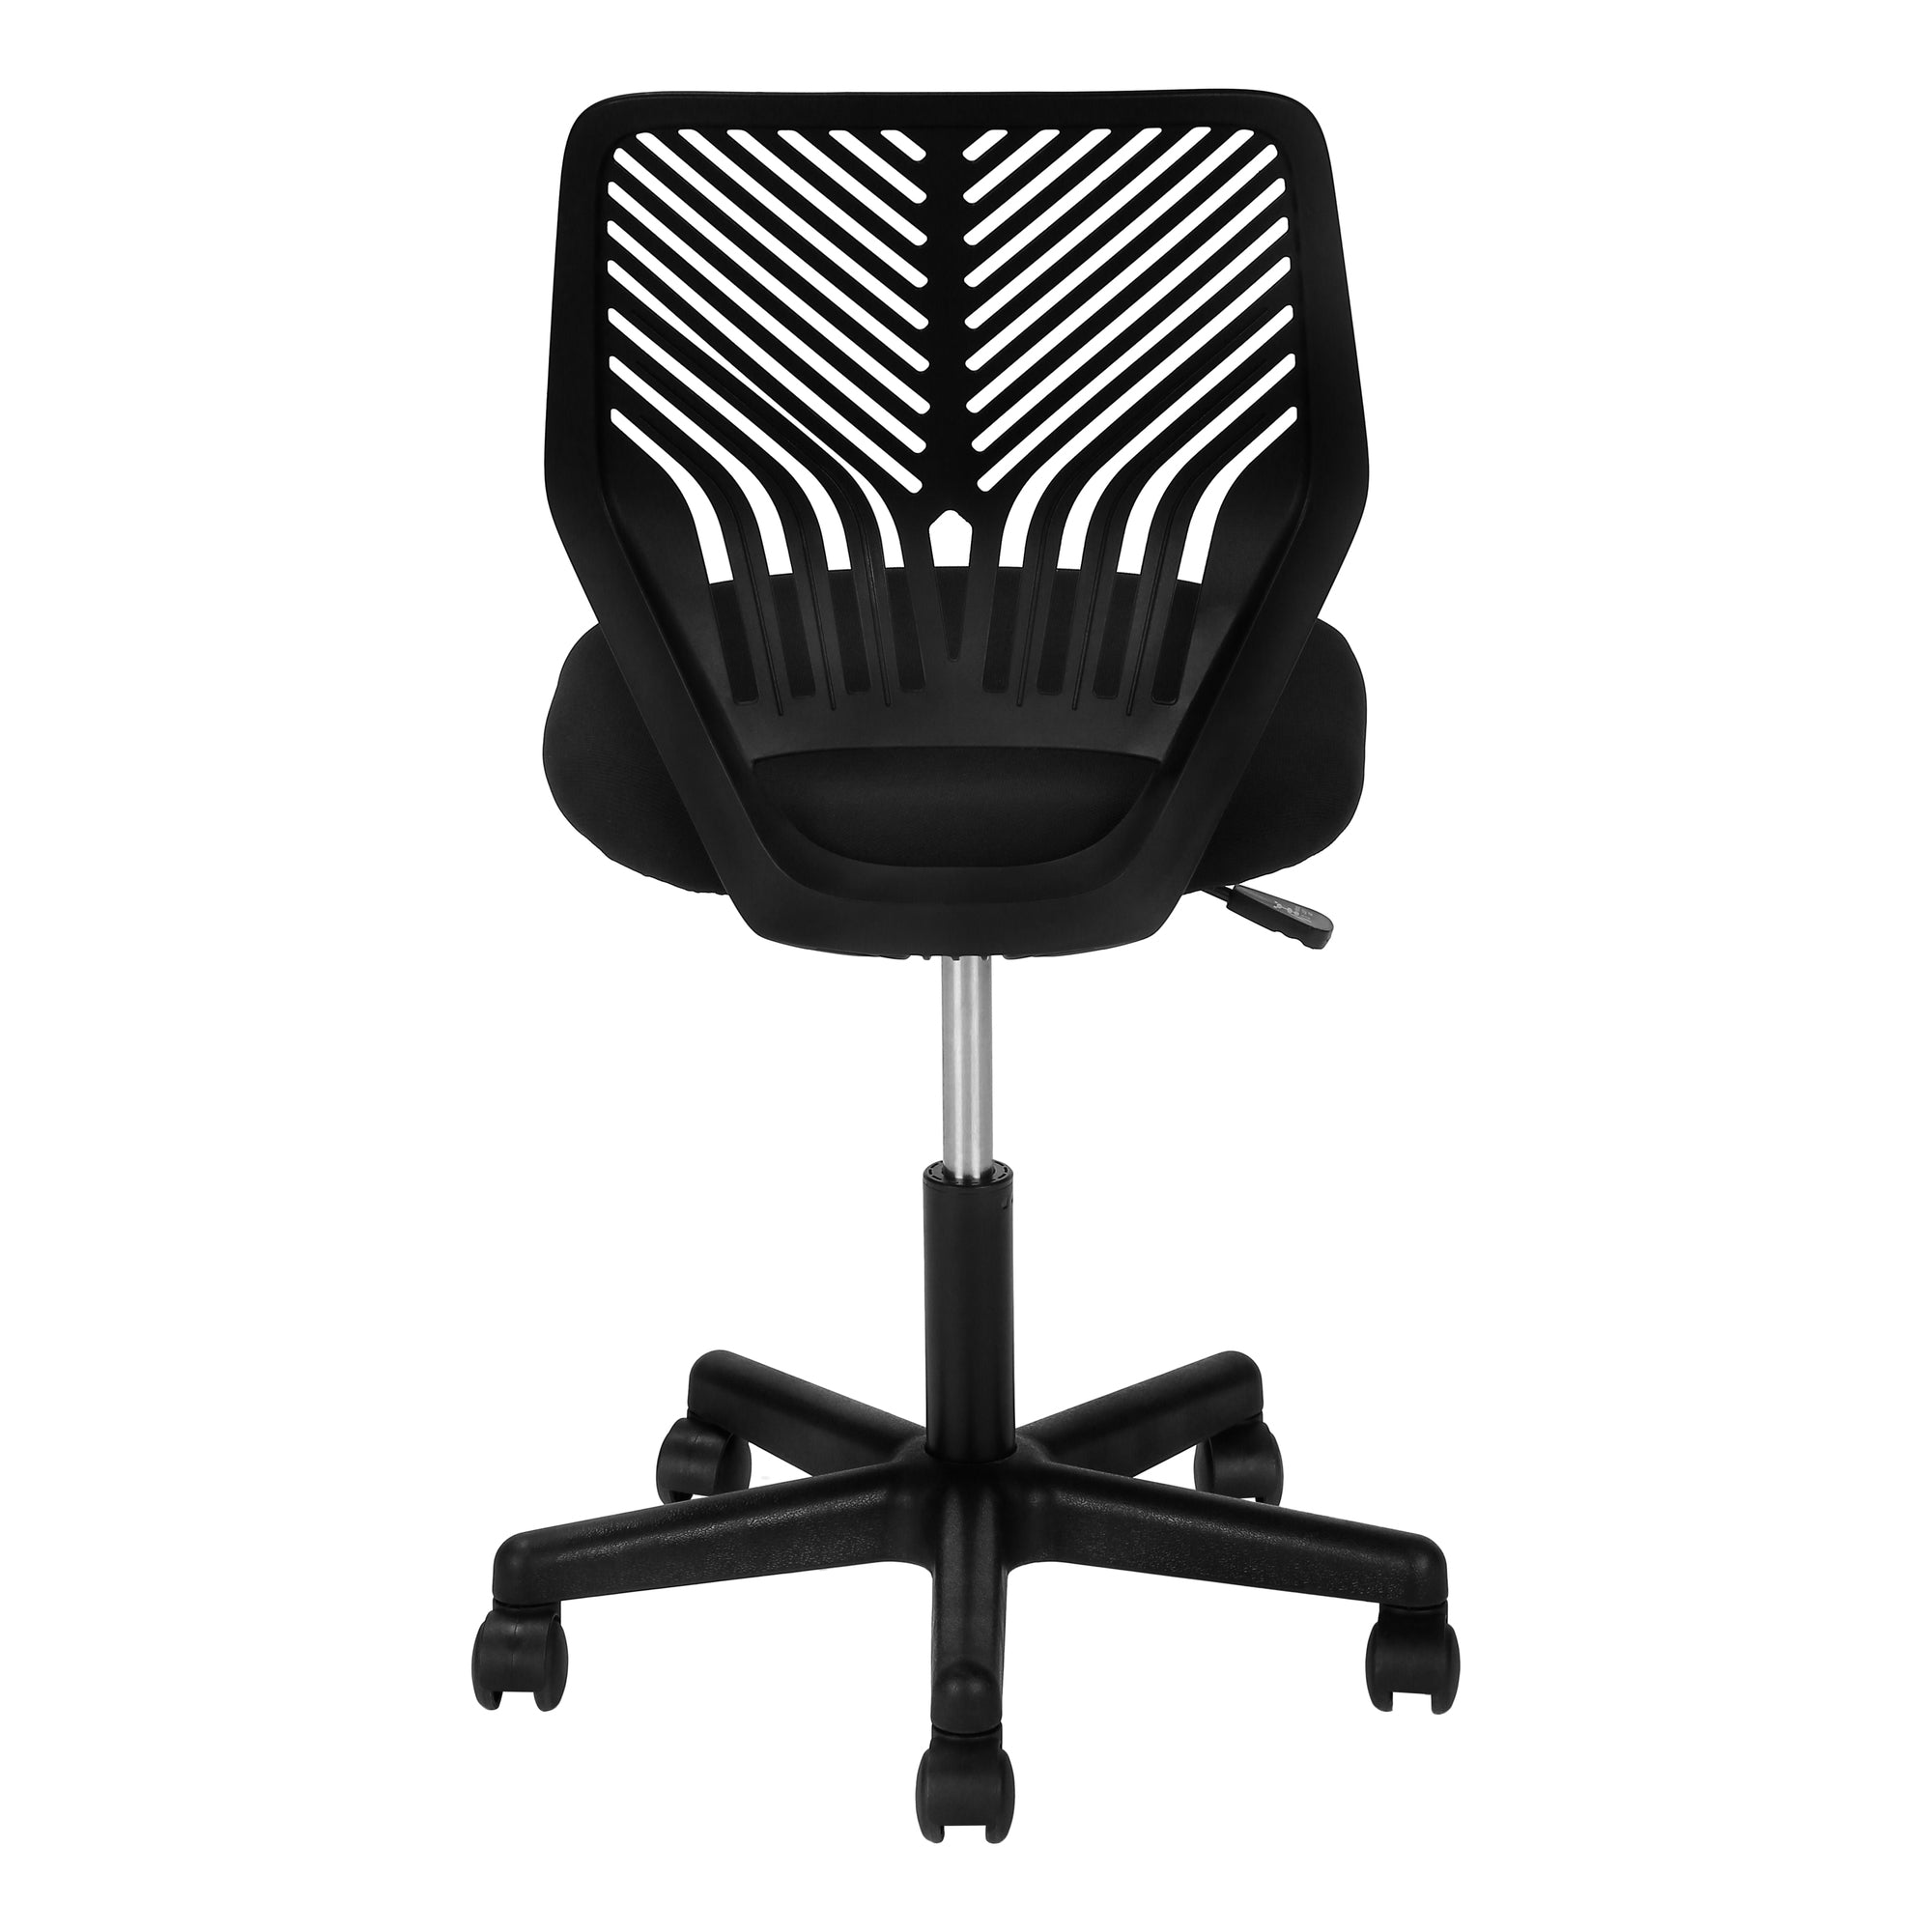 MN-327336    Office Chair, Adjustable Height, Swivel, Ergonomic, Computer Desk, Office, Metal, Laminate, Black, Contemporary, Modern